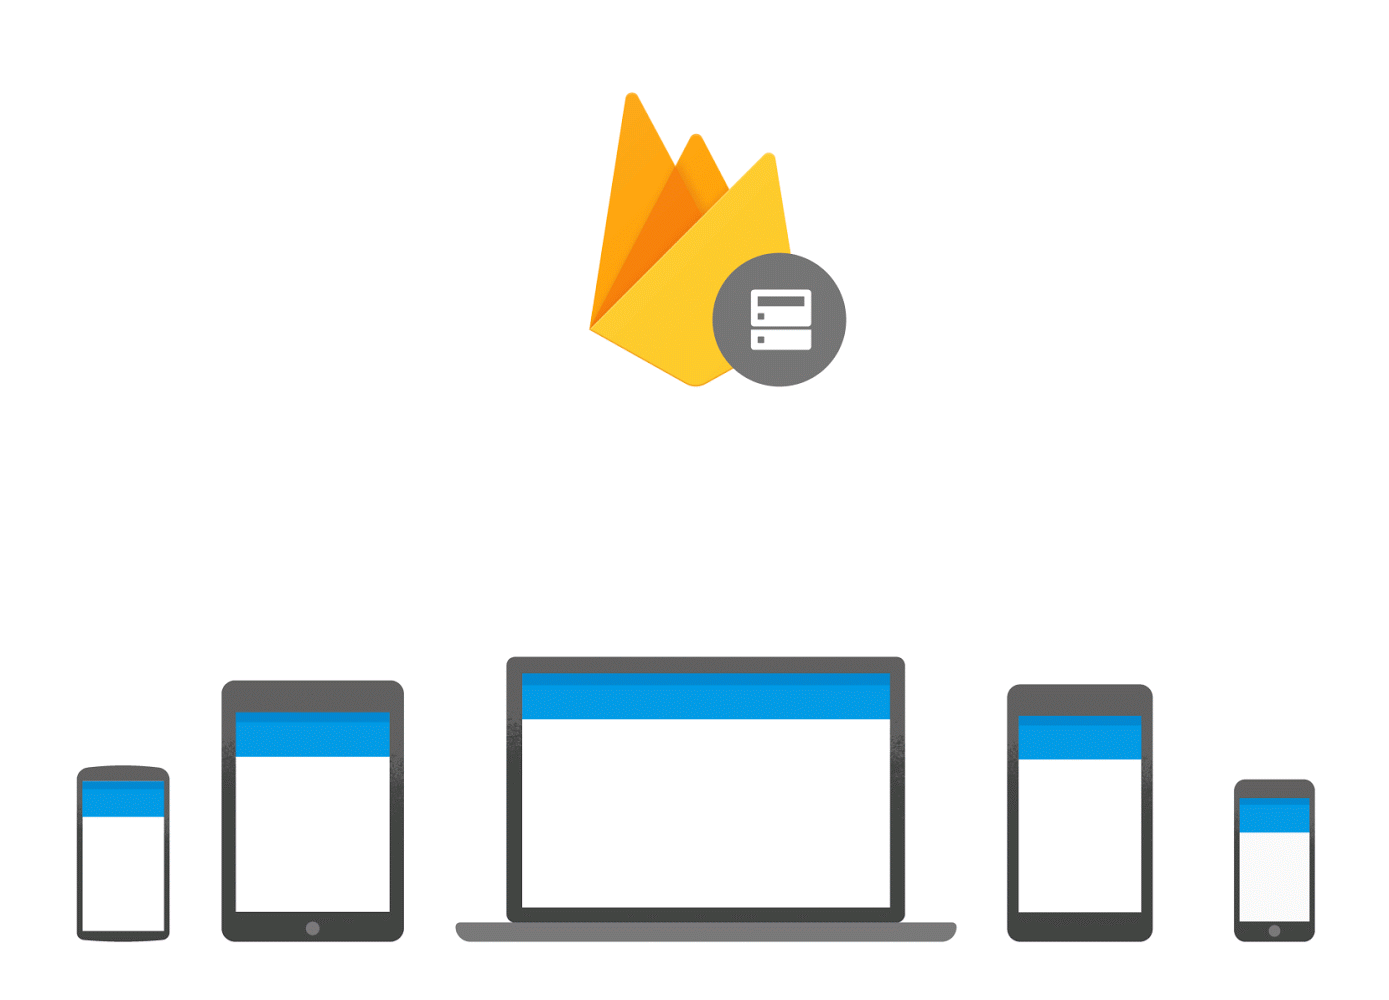 Google firebase system architecture